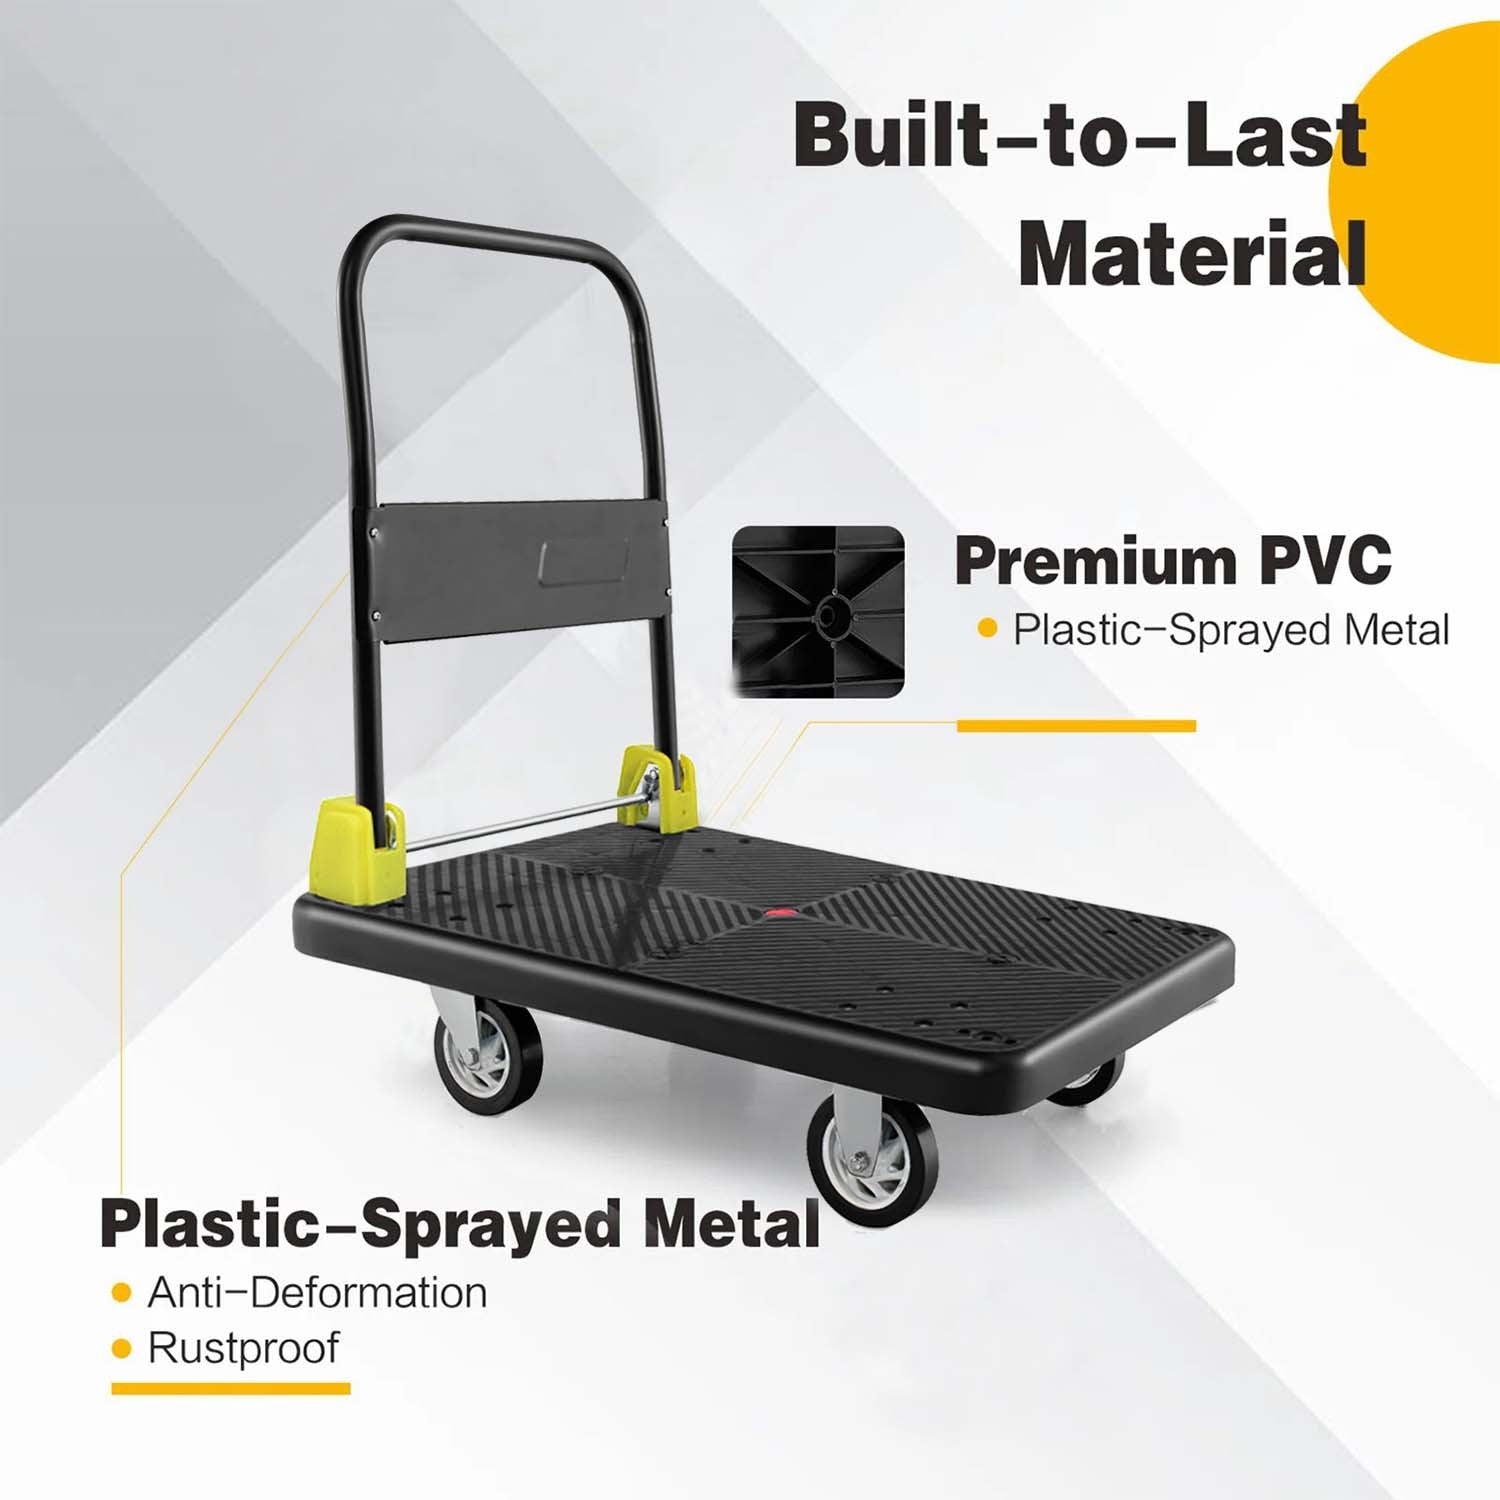 660 lbs. Capacity Platform Cart Heavy Duty Dolly black-metal